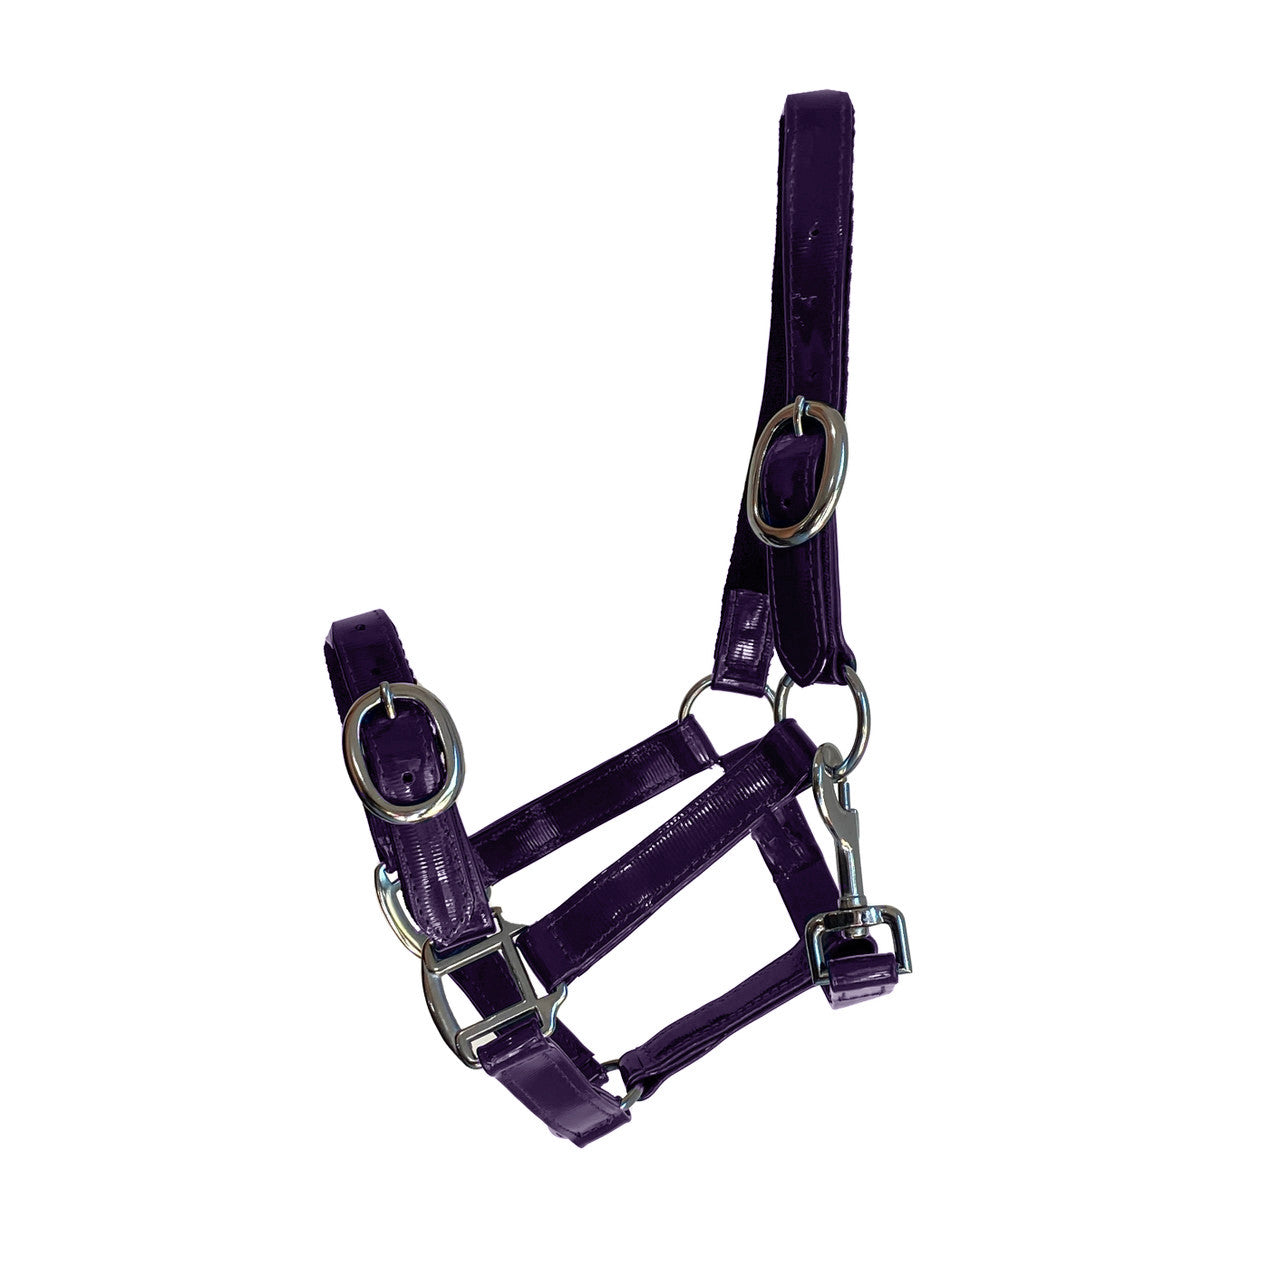 PVC Halter - Dark Purple with Chrome Buckles